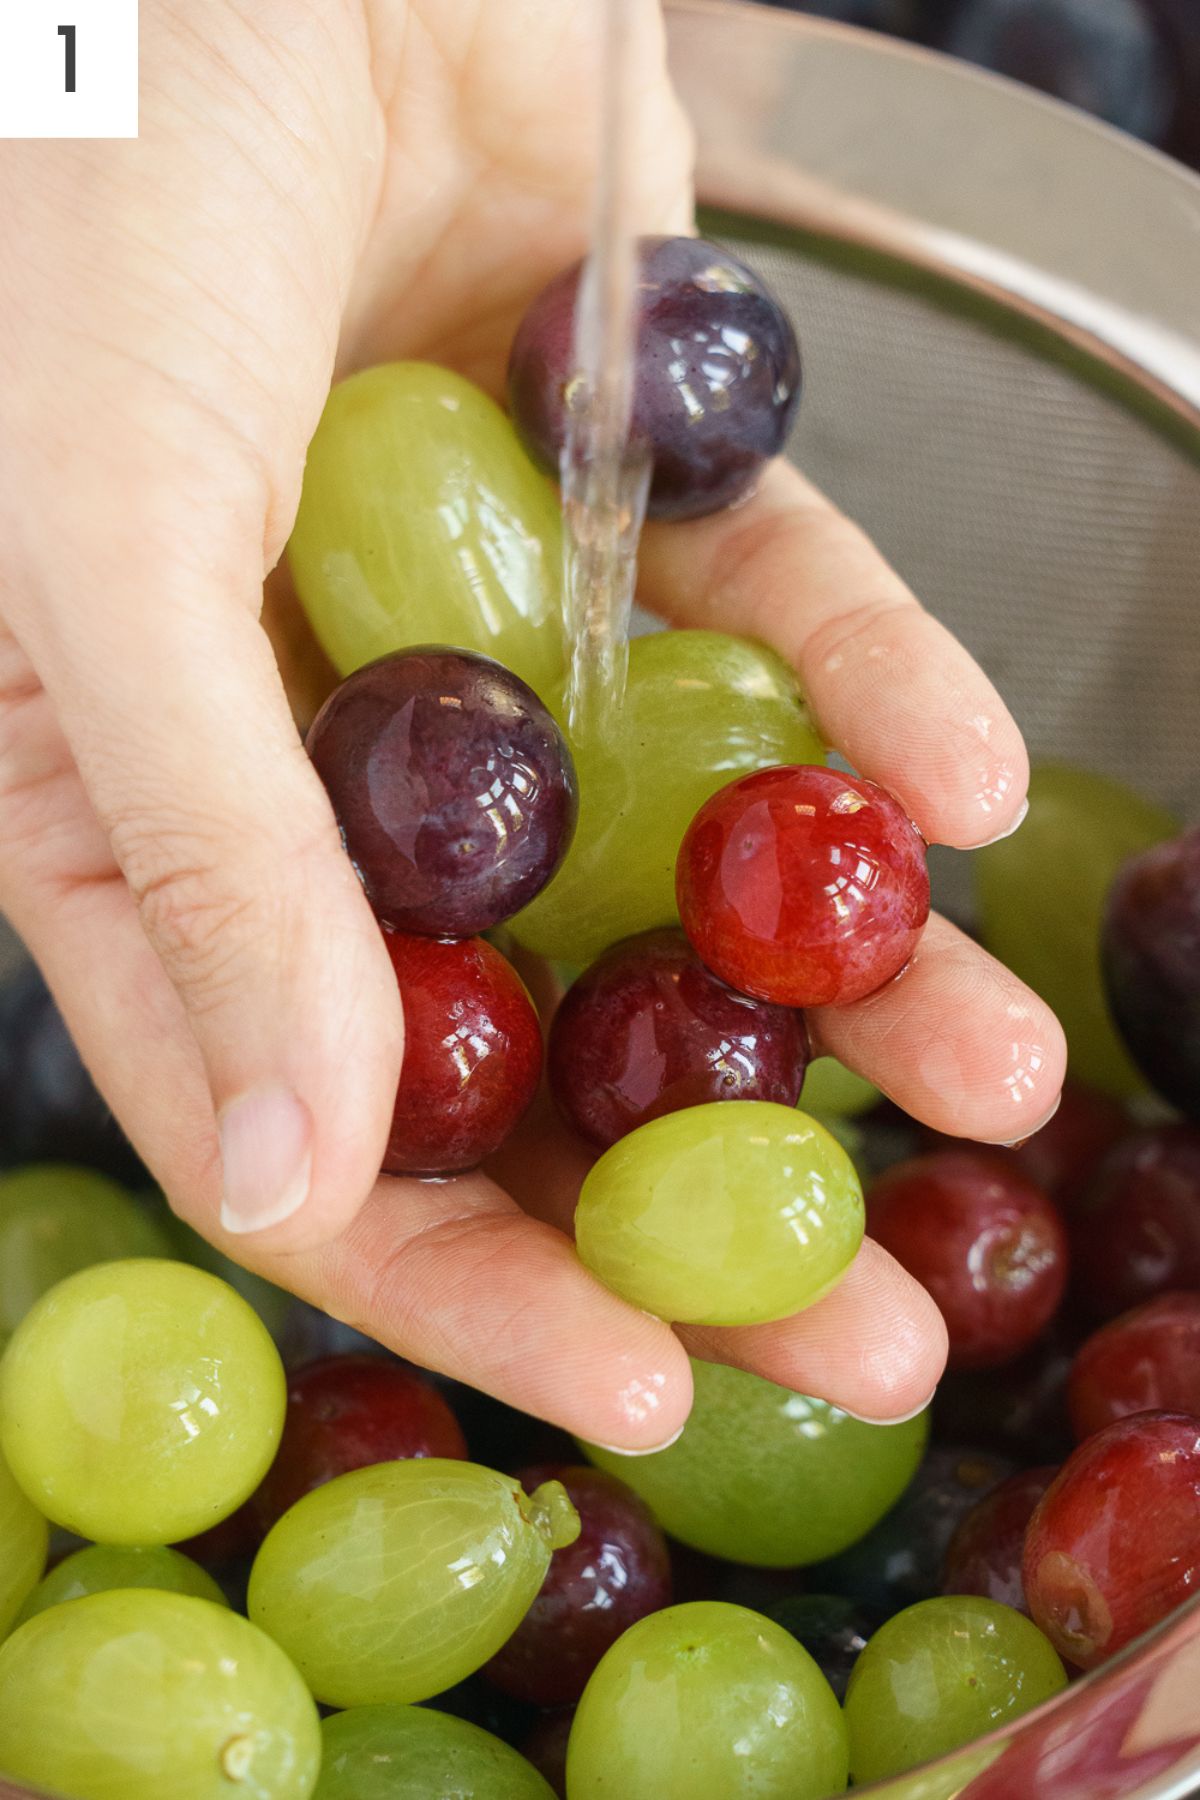 Hand washing grapes under running water.